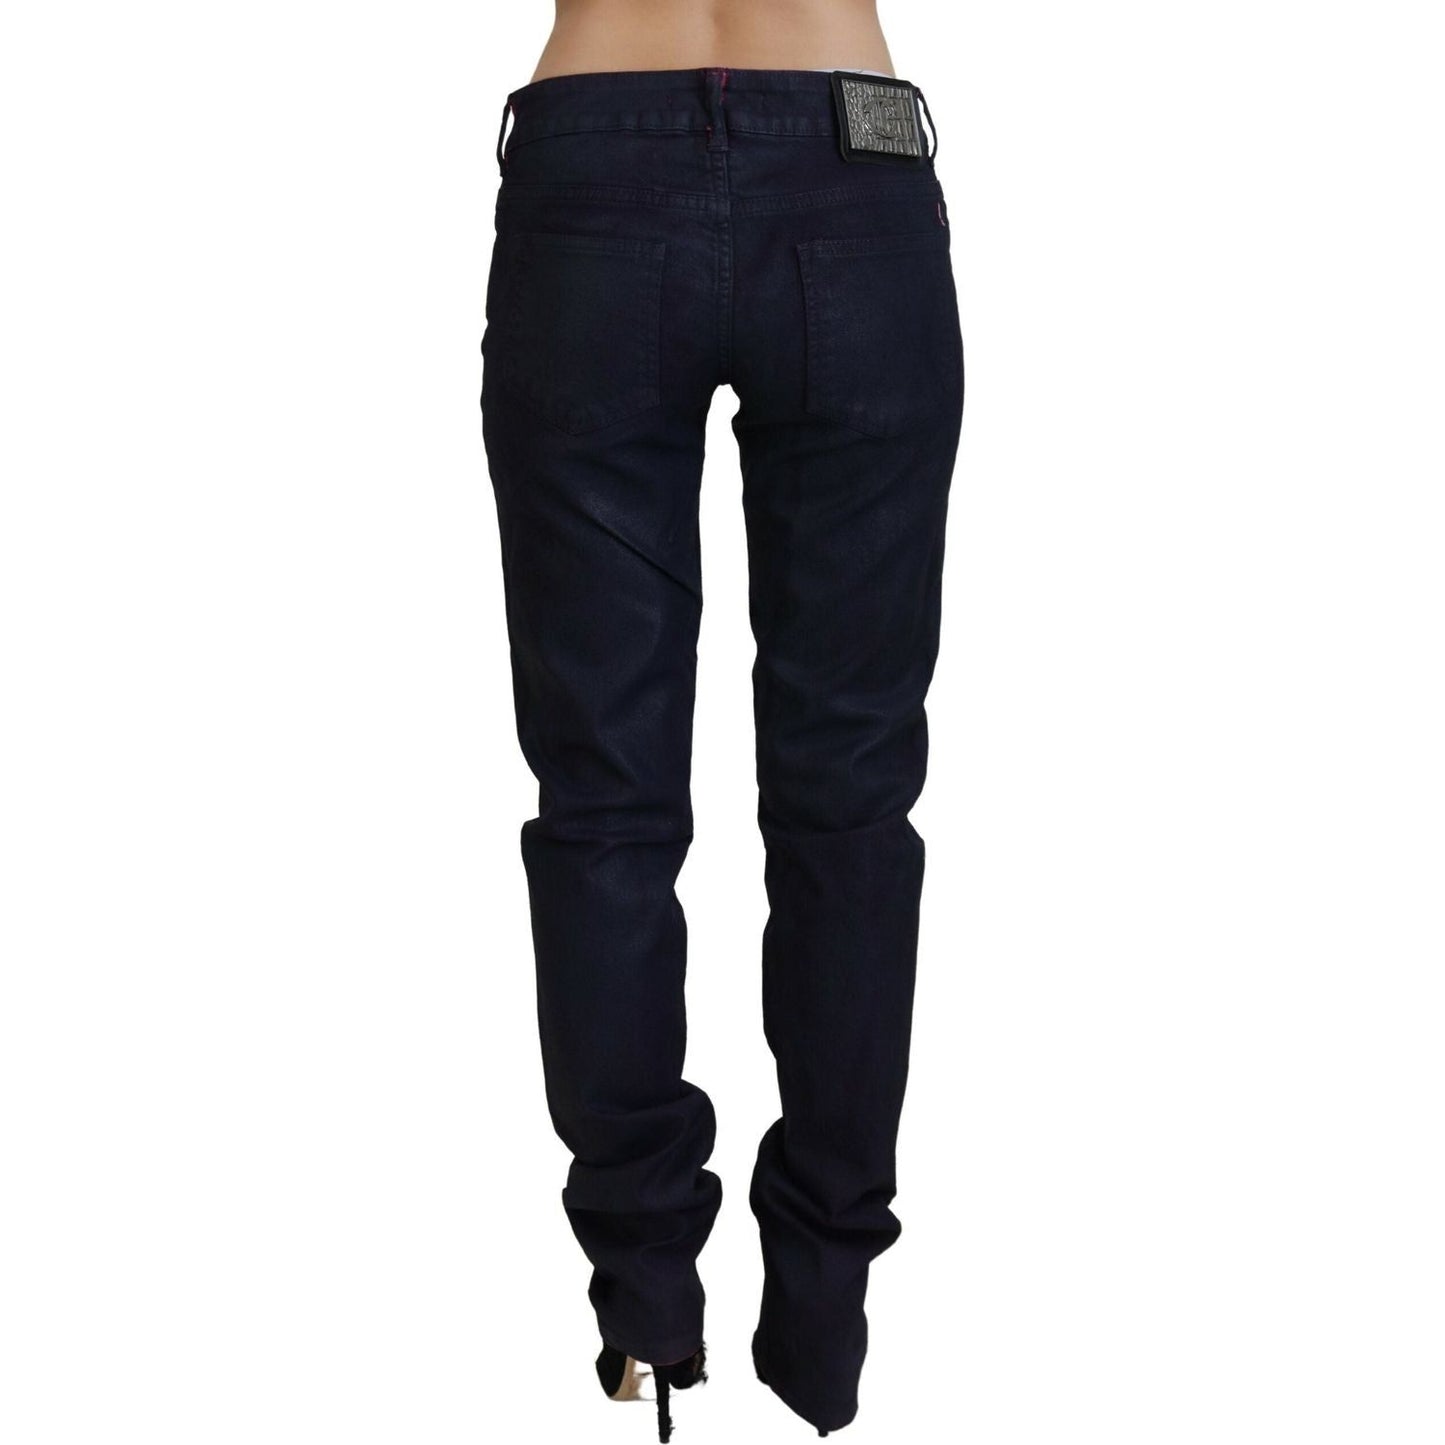 Just Cavalli Sleek Black Low Waist Denim Pants black-low-waist-slim-fit-women-casual-denim-jeans